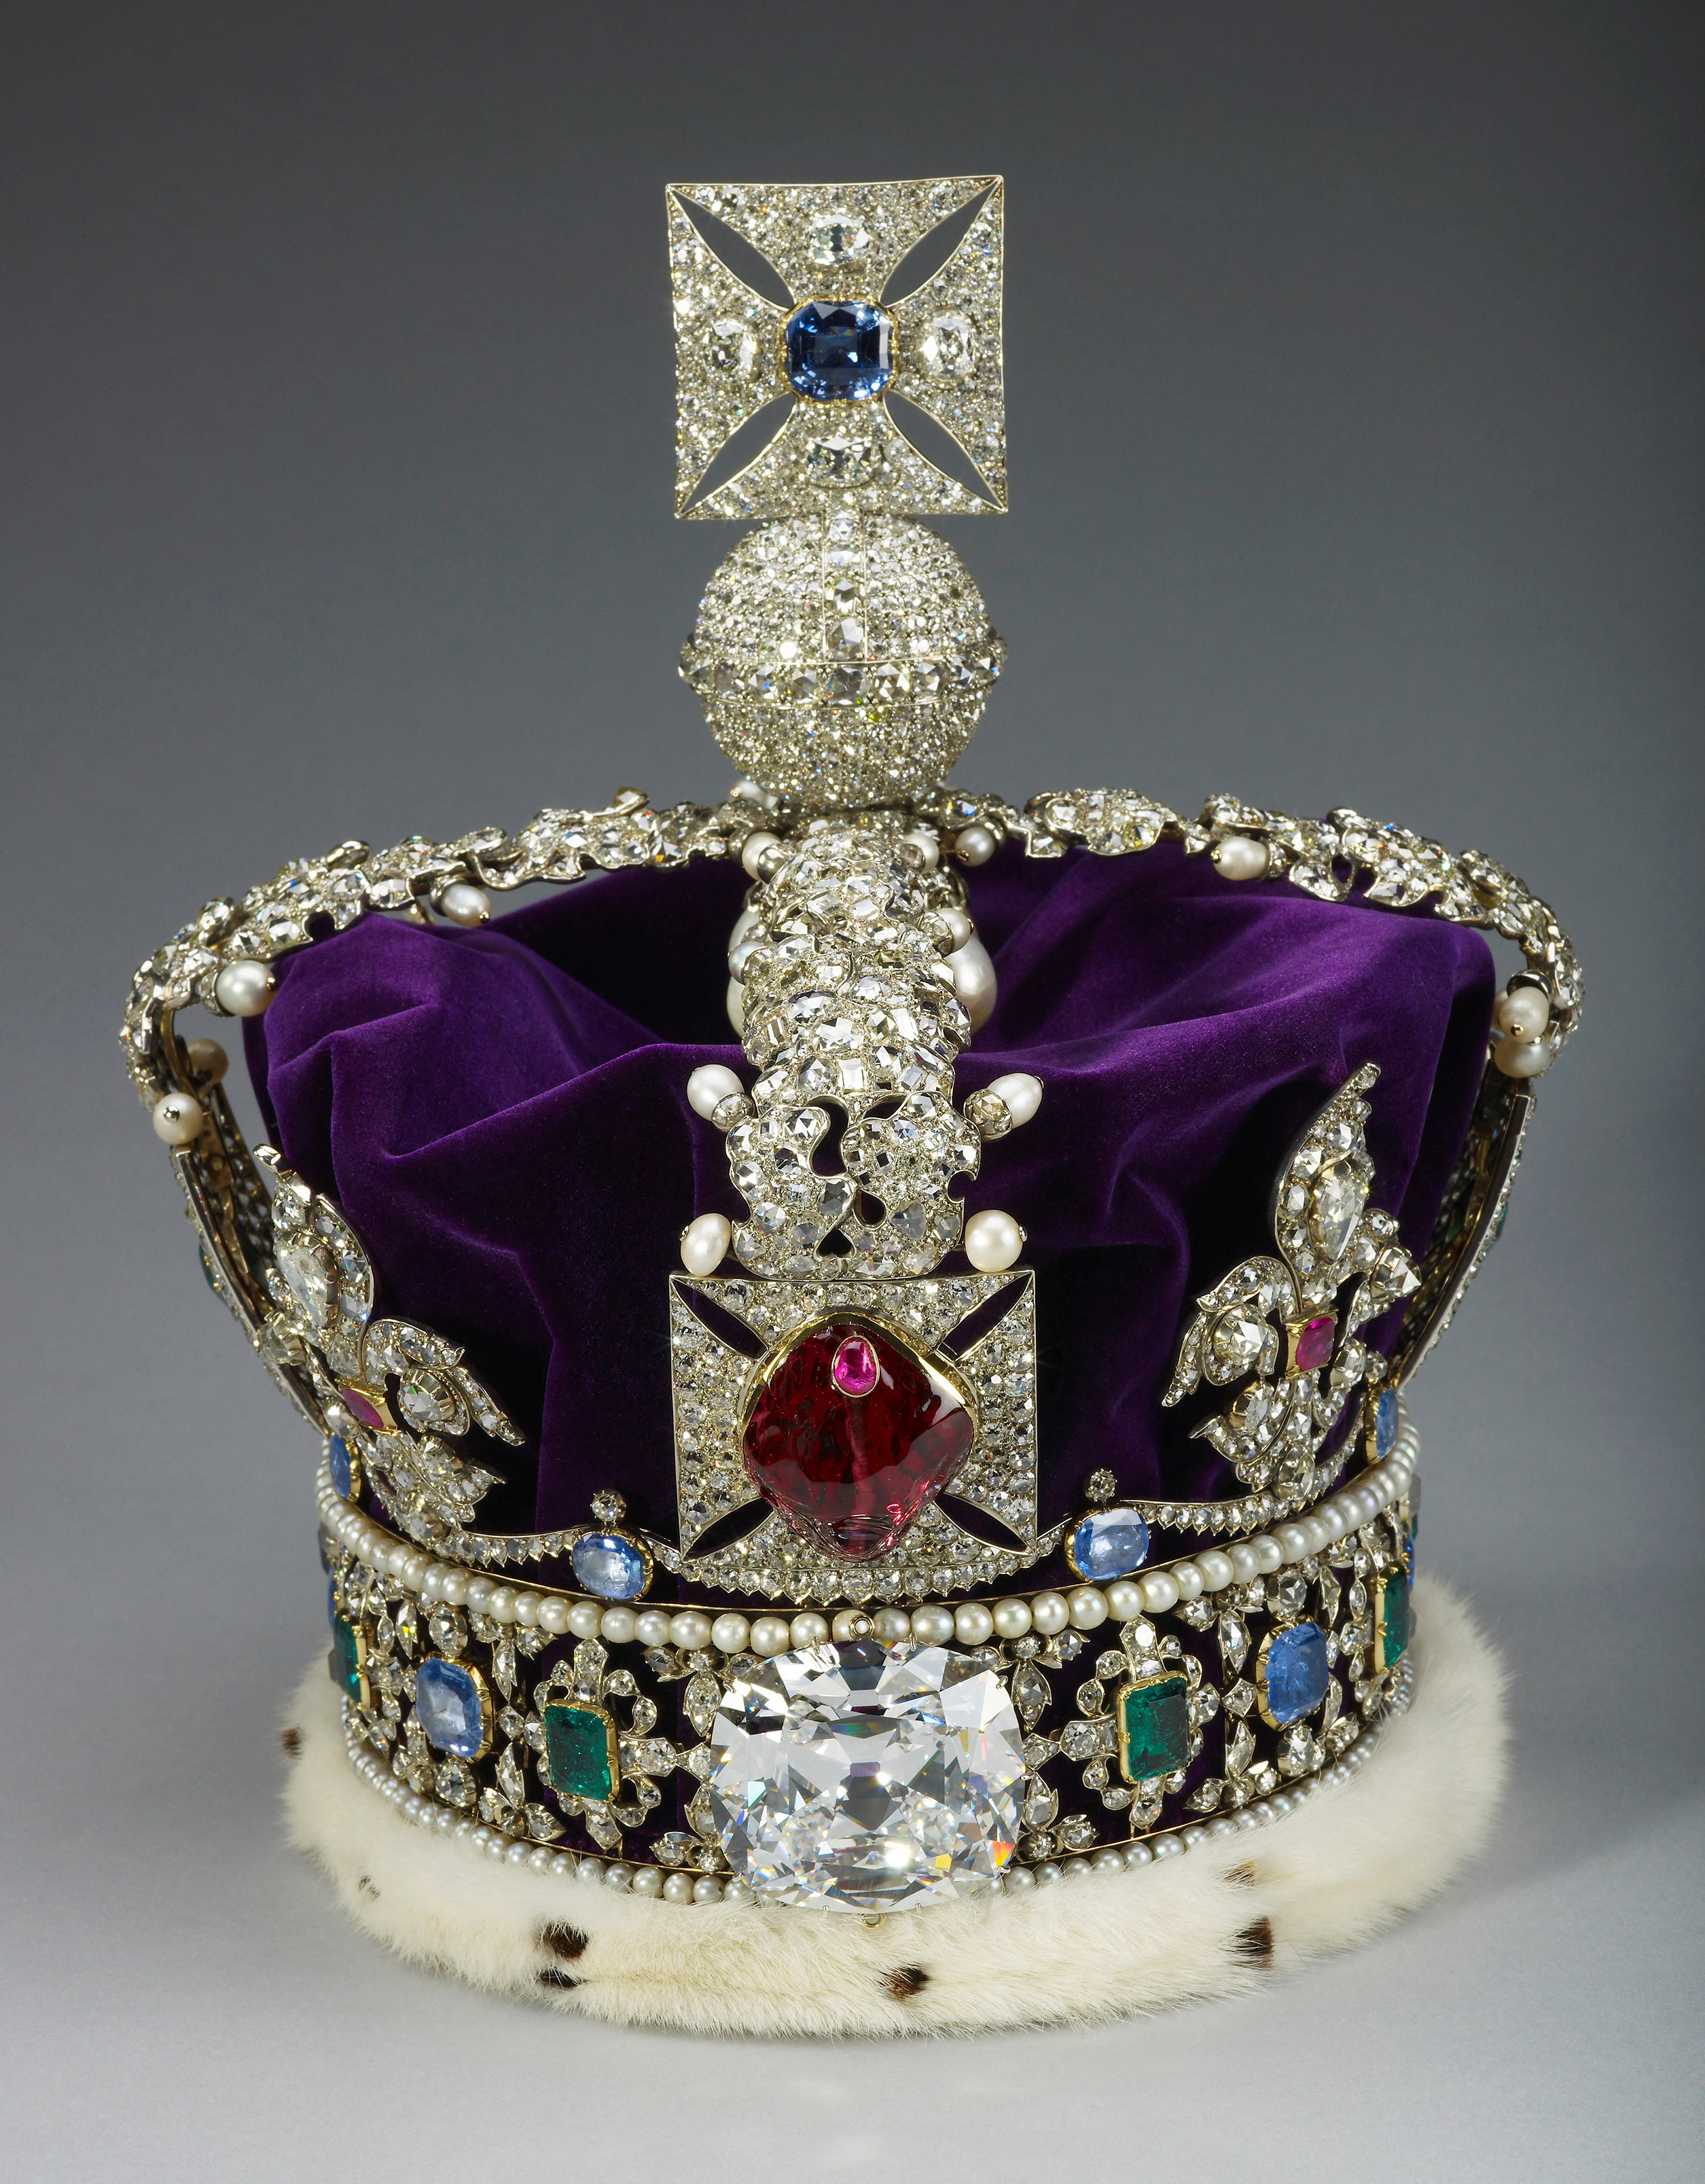 As it happened: UK crowns King Charles at coronation as world